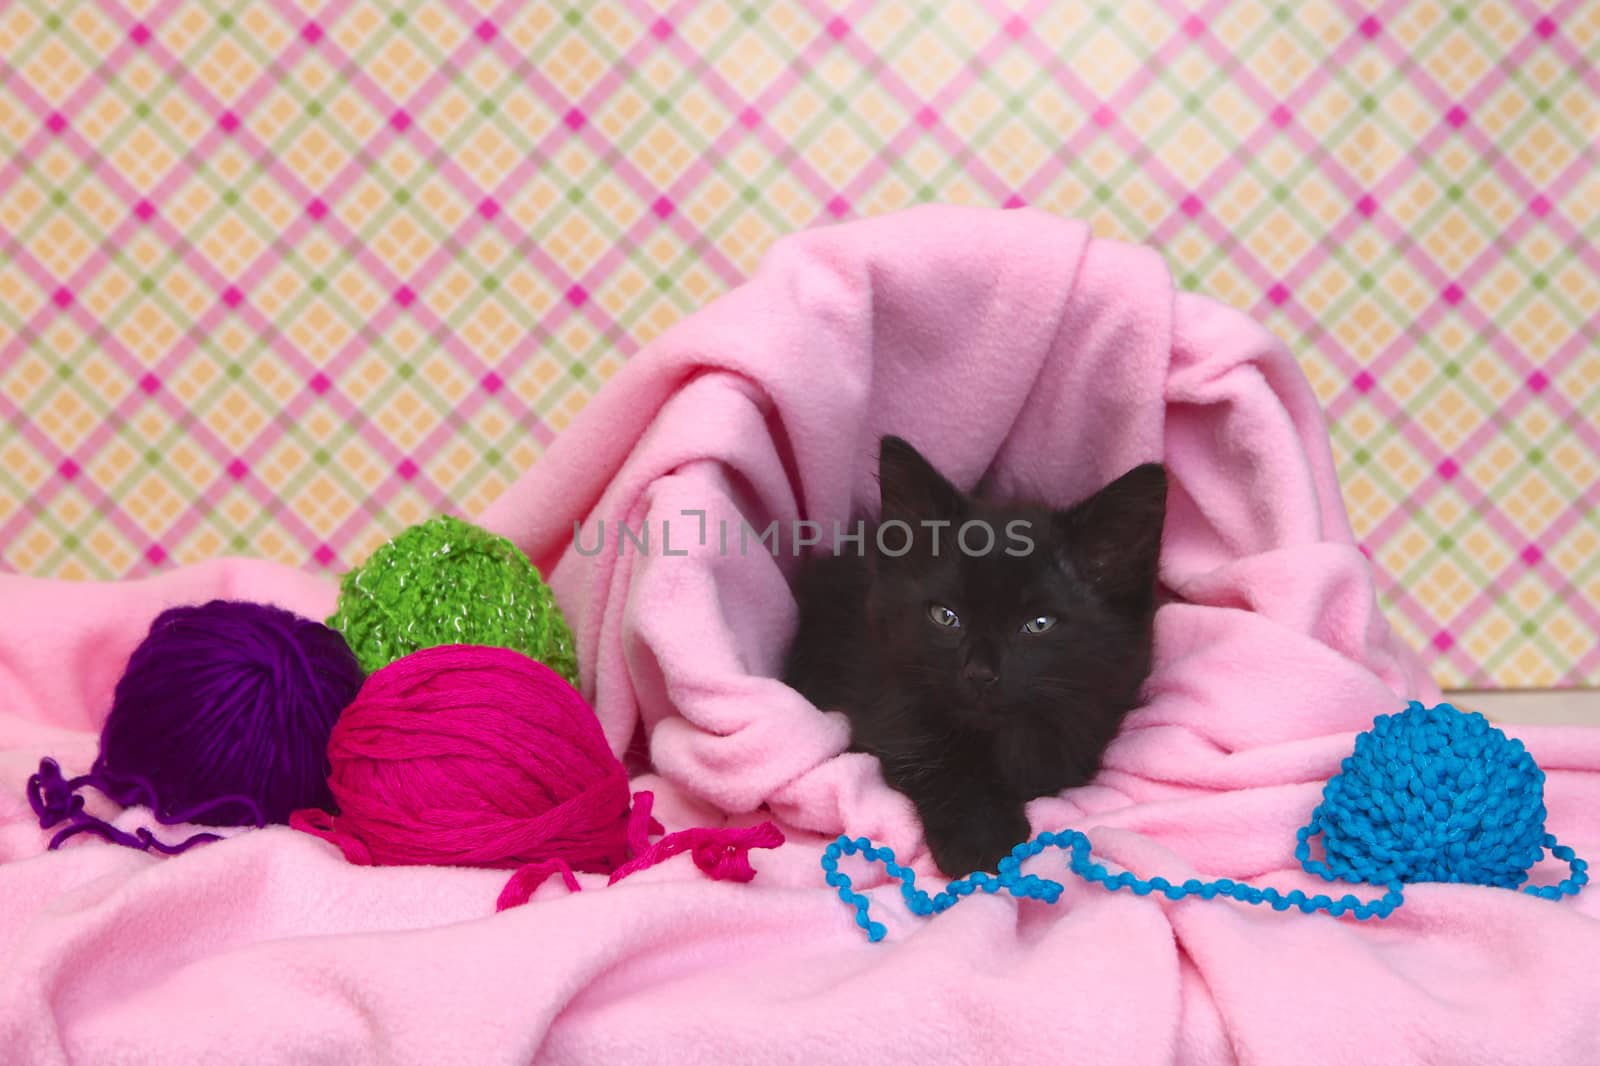 Black Kitten in a Basket With Yarn by tobkatrina